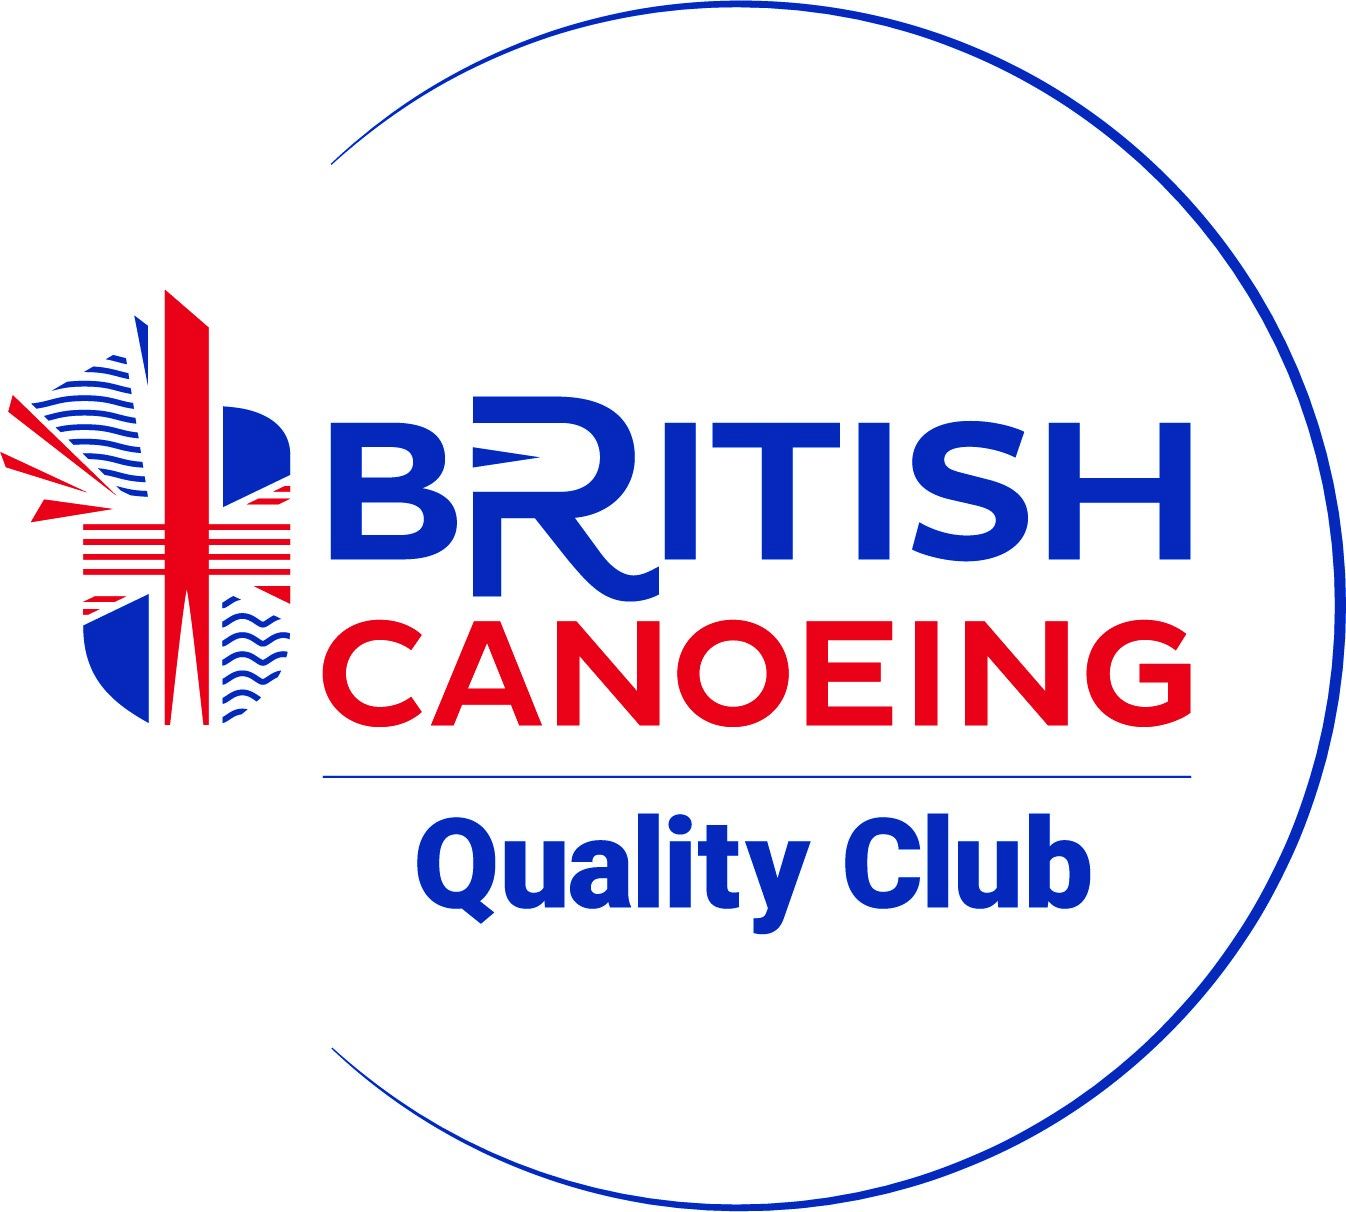 Brtitish Canoeing Quality Club